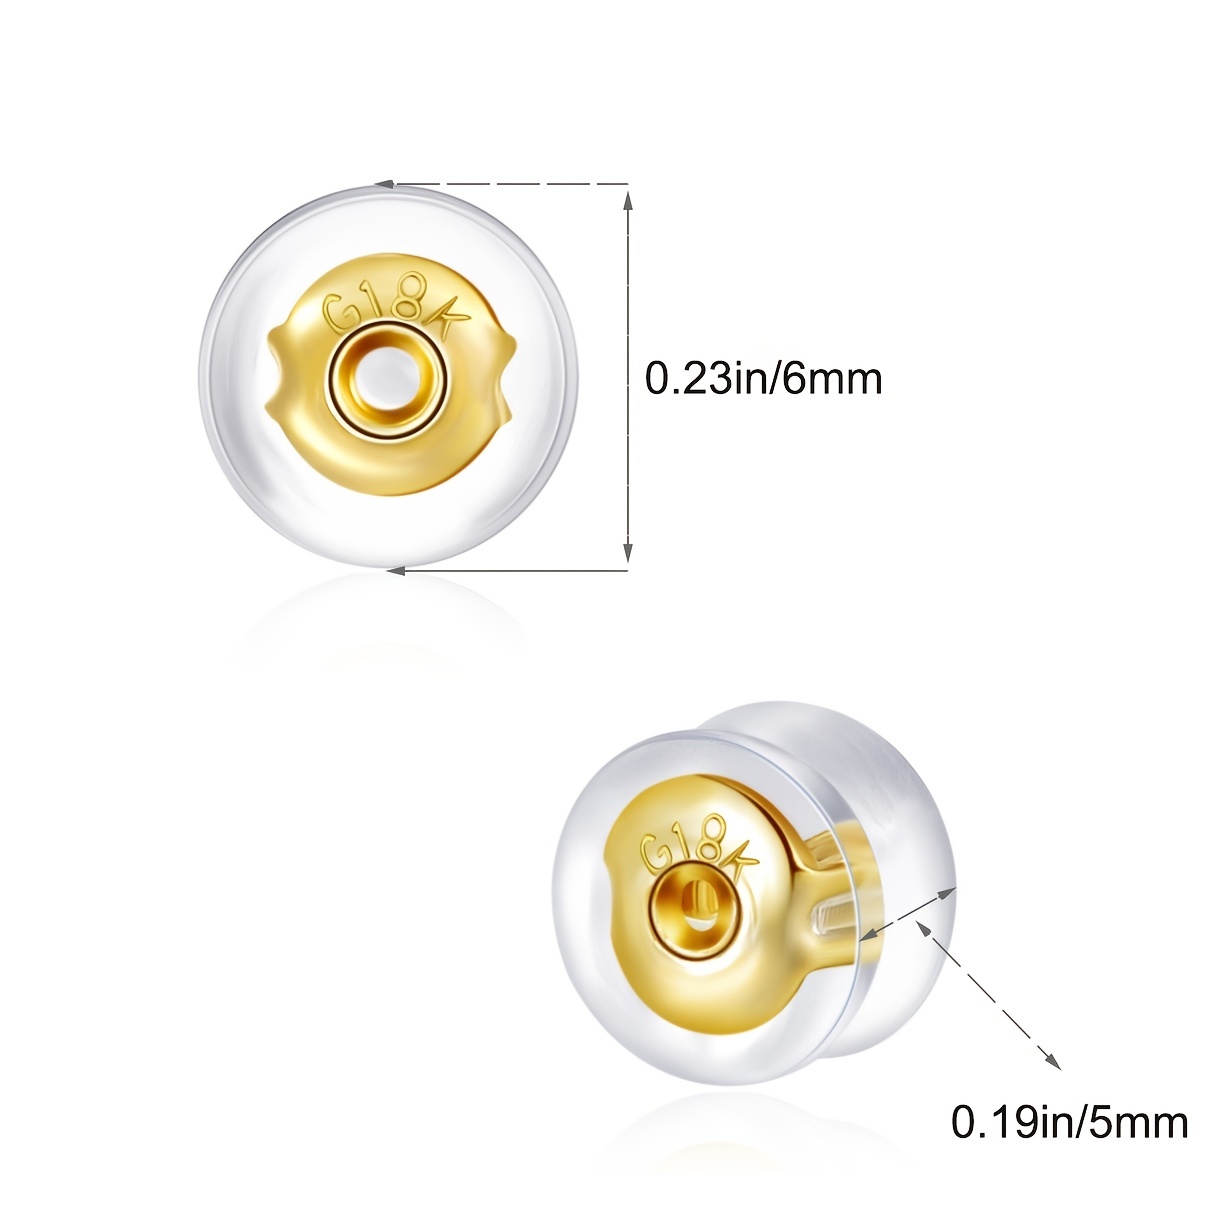 12pcs Locking Secure Earring Backs For Studs, Silicone Backs Gold